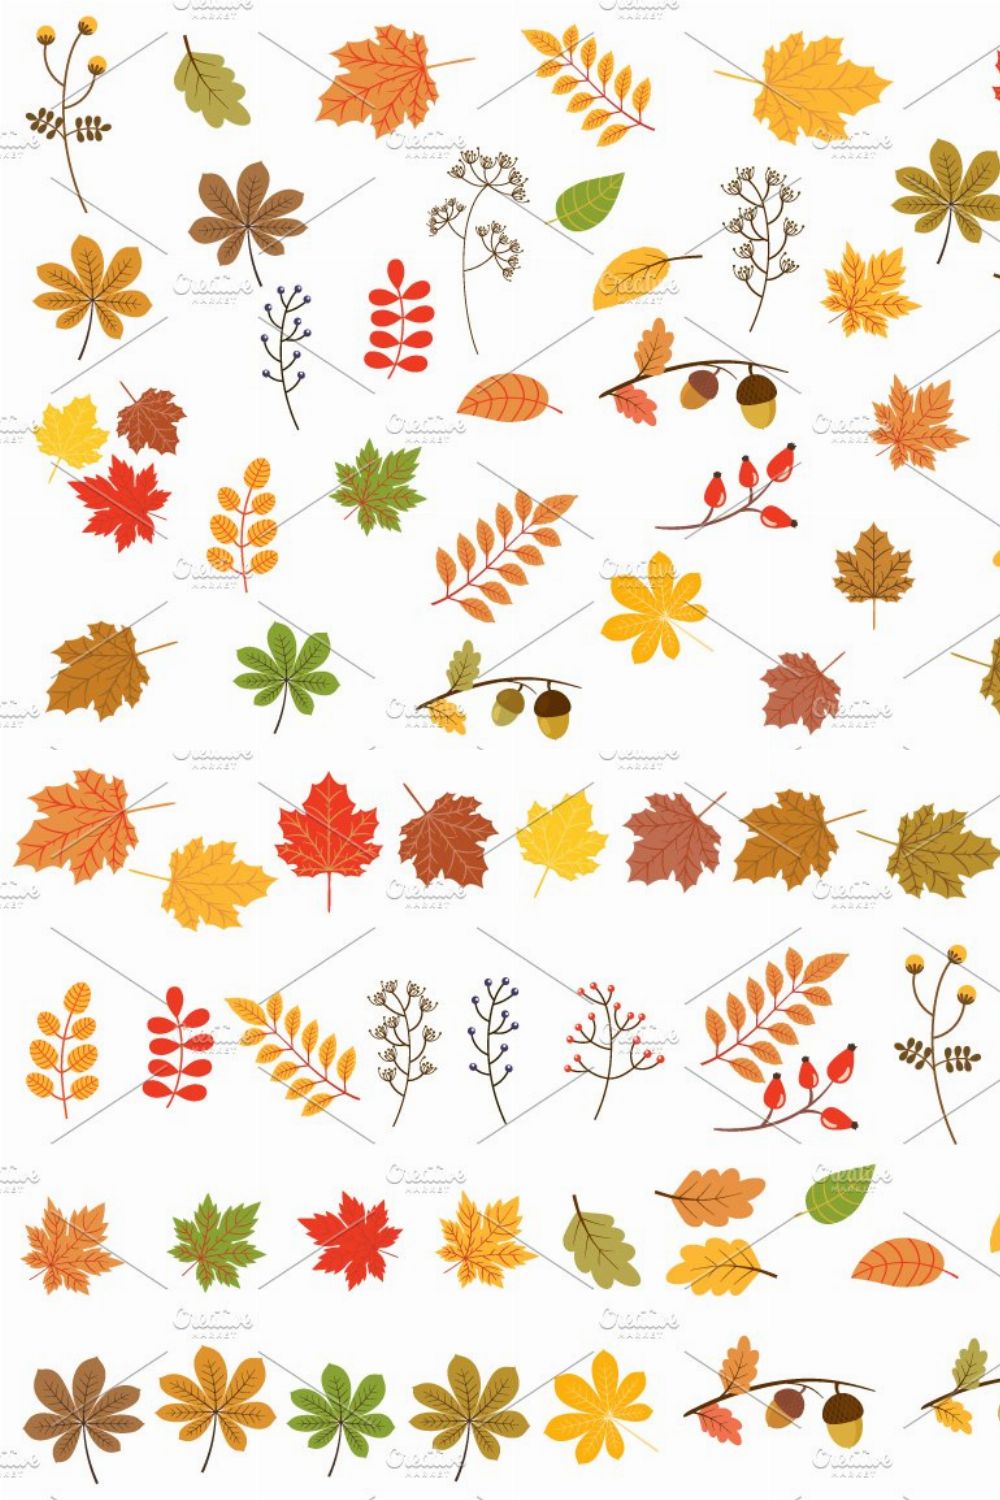 Autumn leaves clipart set pinterest preview image.